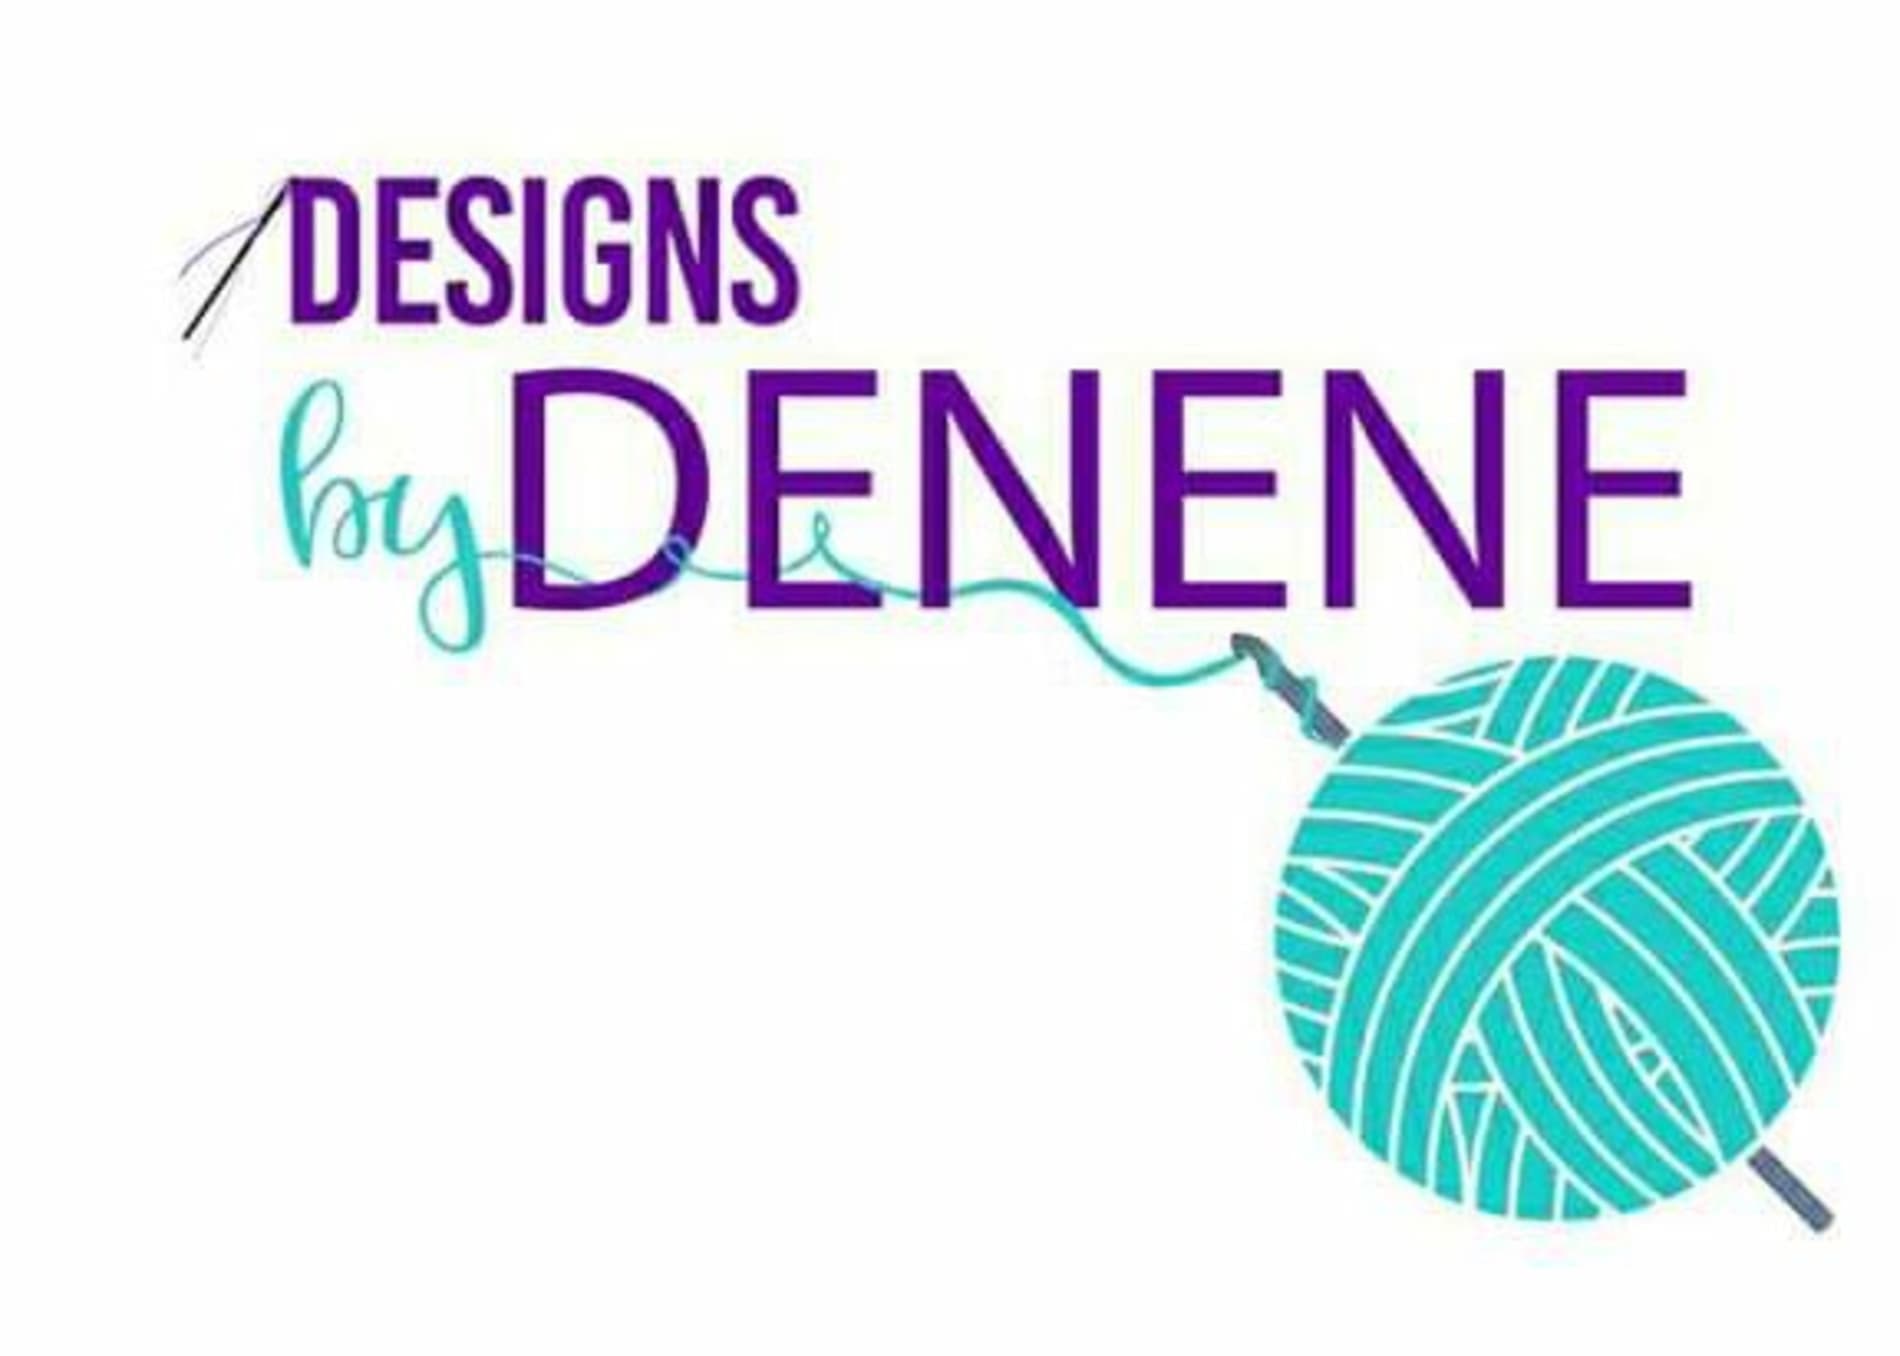 Designs by Denene